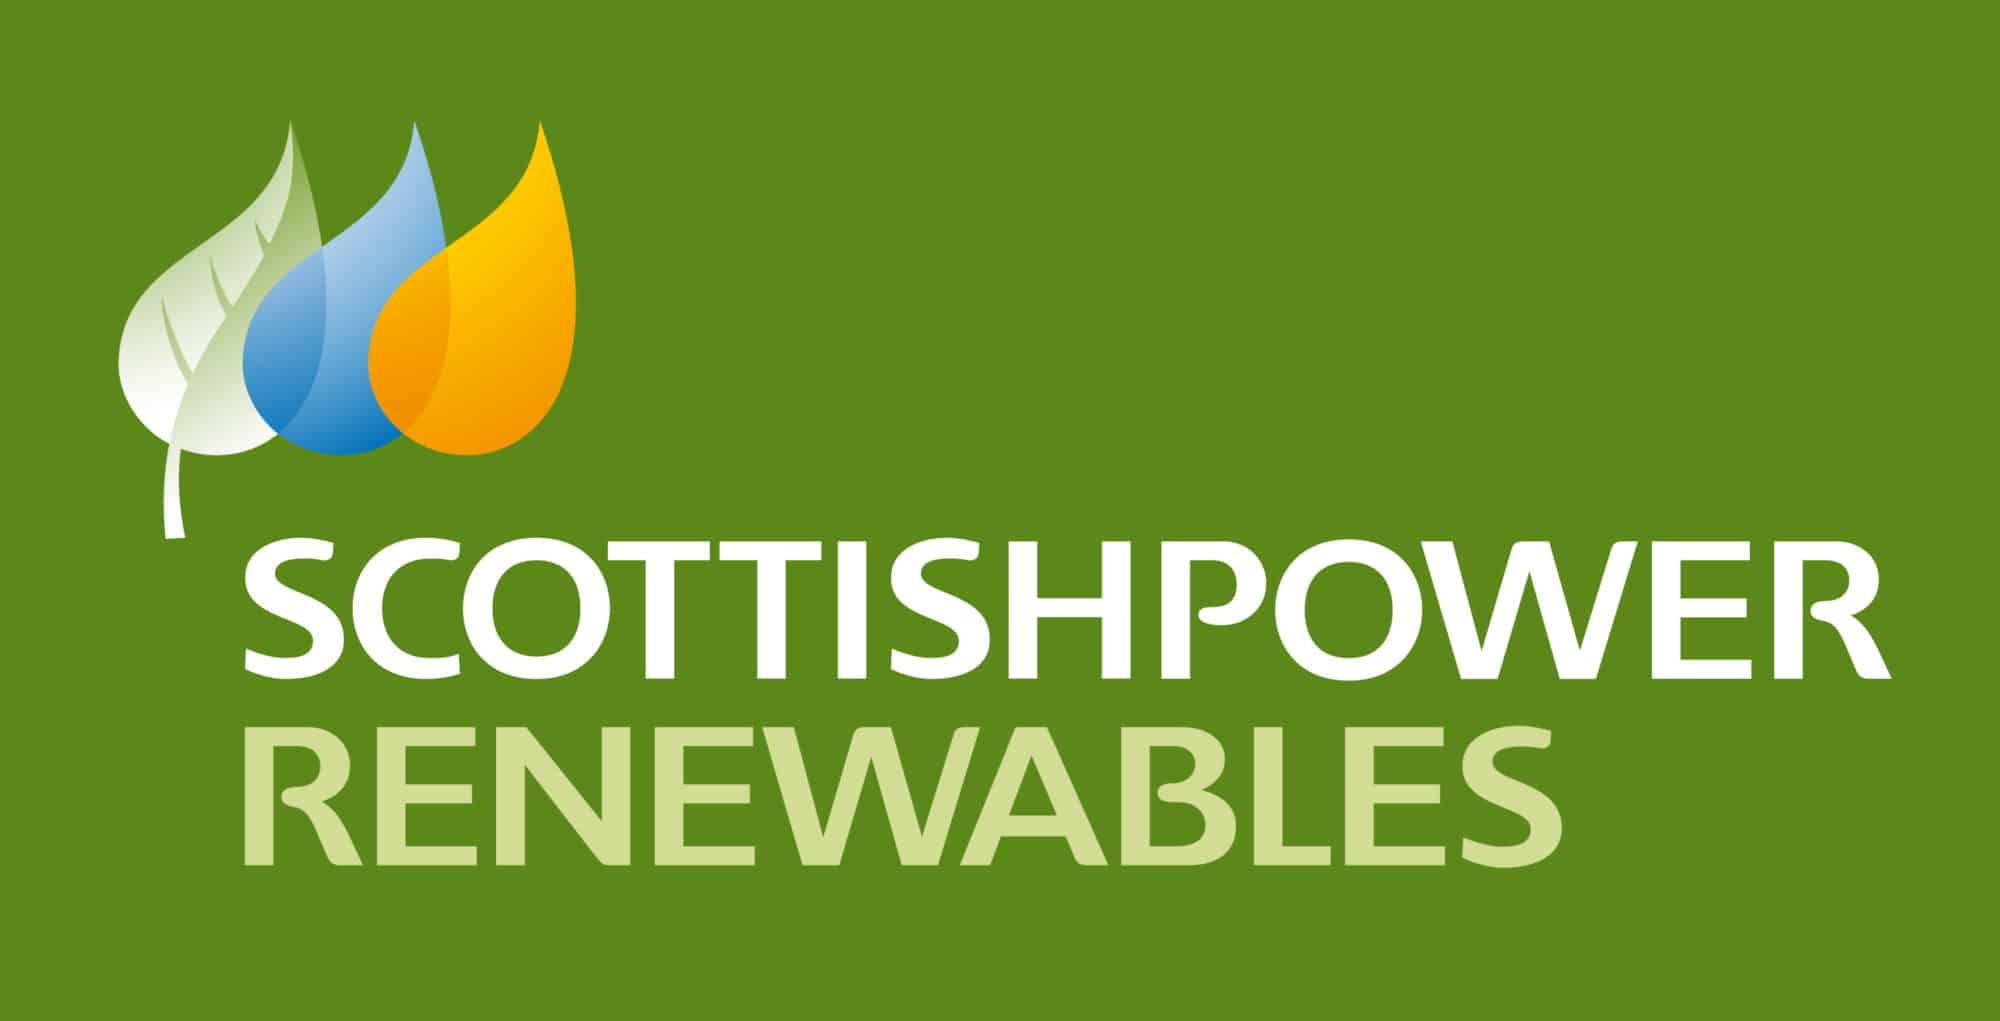 Scottish Power Renewables Logo